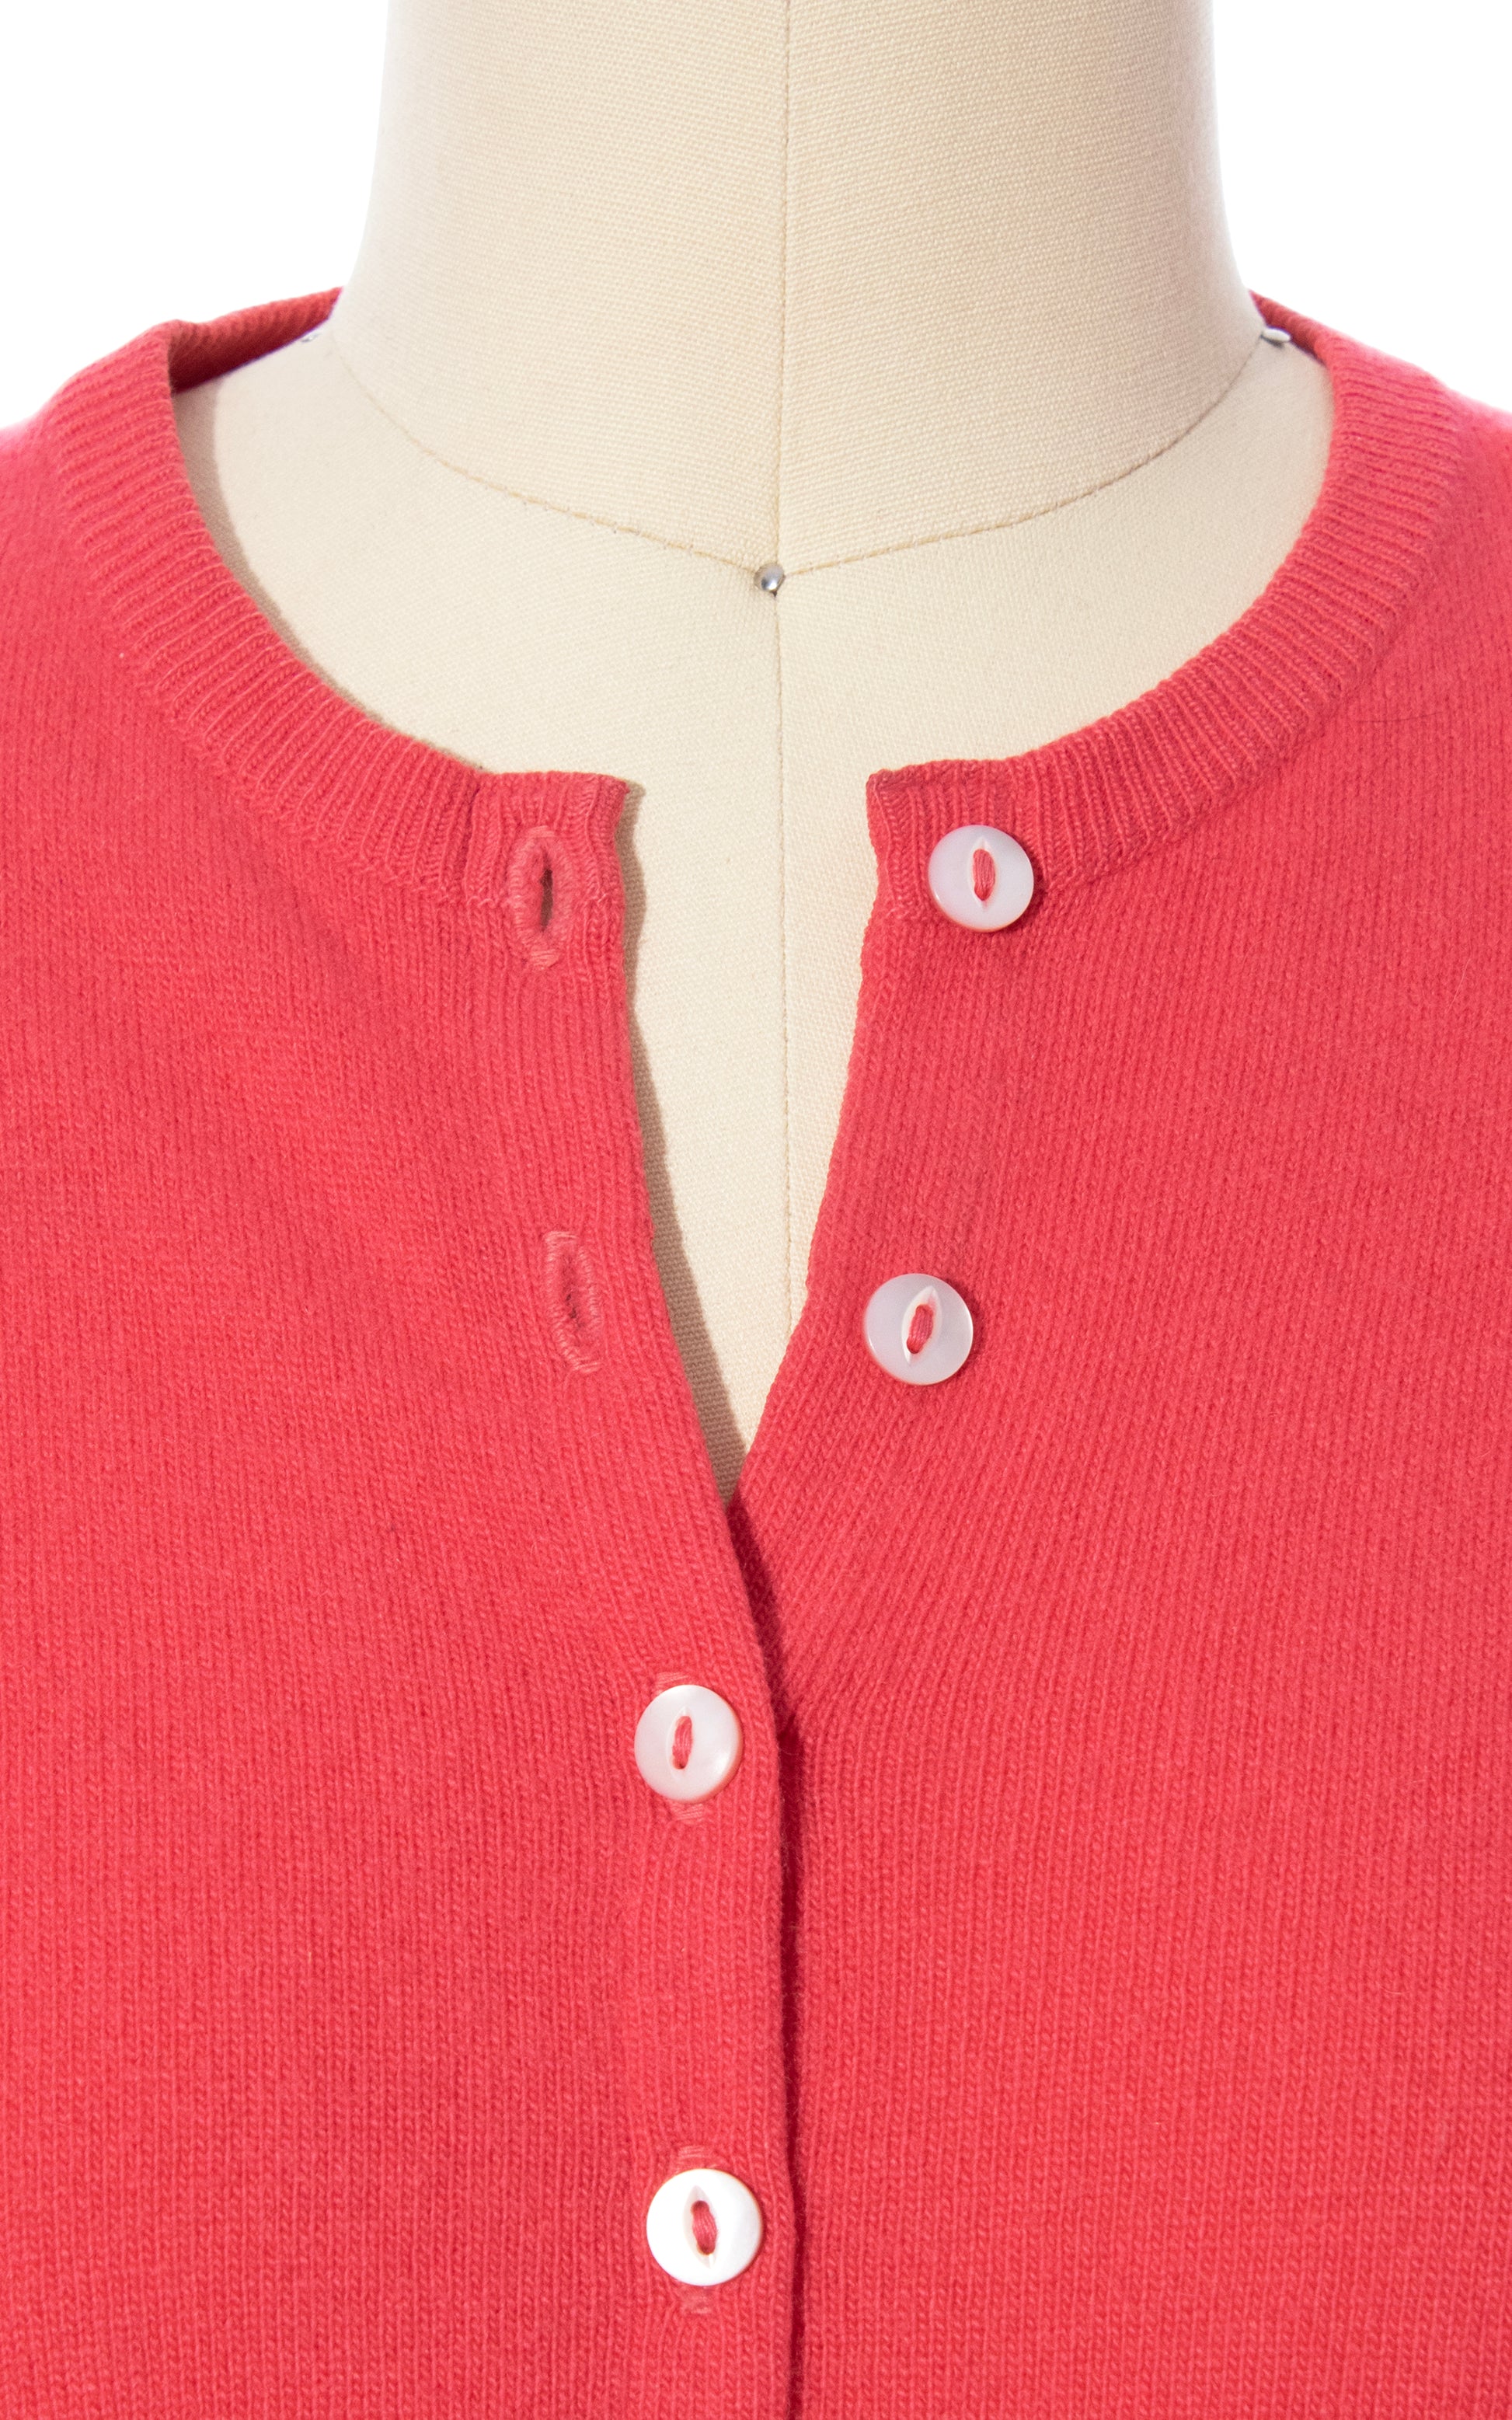 Vintage 50s 1950s Pink Cashmere Knit Short Sleeve Sweater Top BirthdayLifeVintage